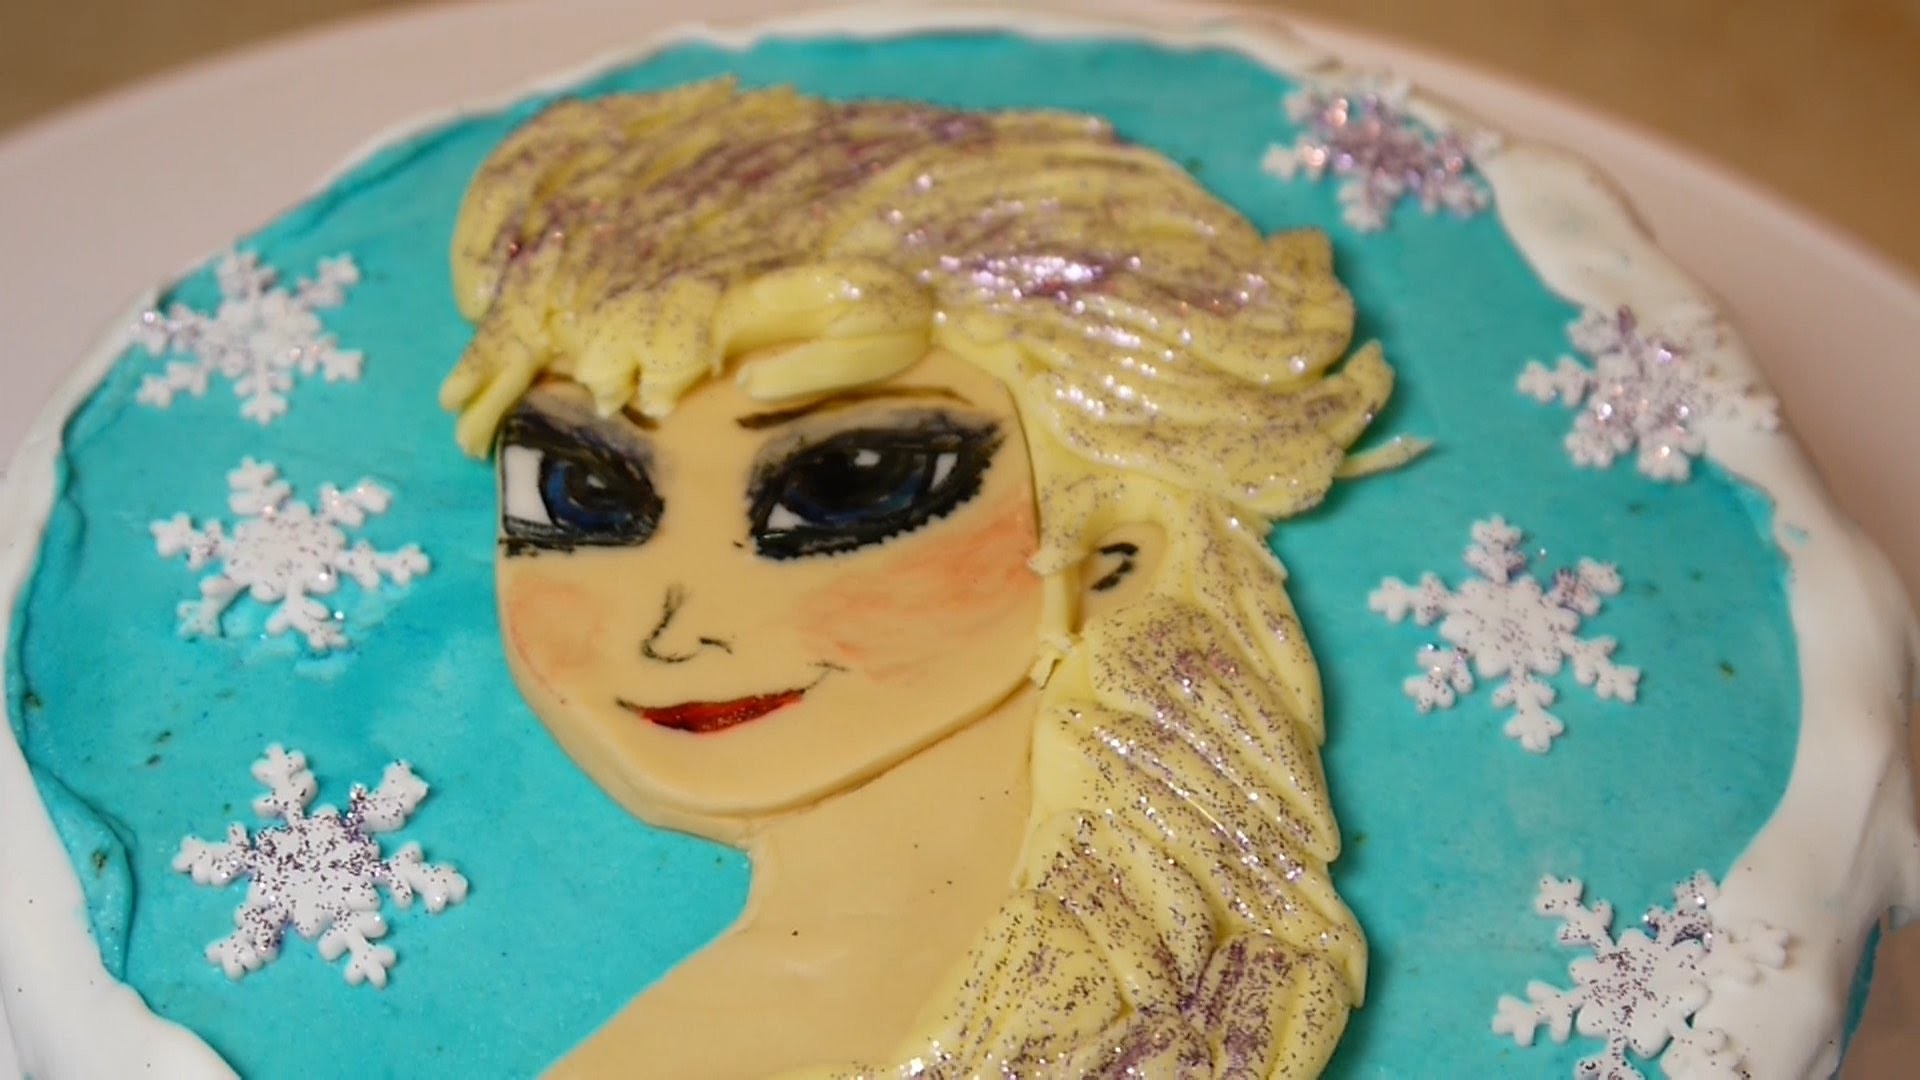 DIY Frozen cake Elsa Torte Tutorial Fondant selber machen Anleitung Eiskönigin Buttercreme